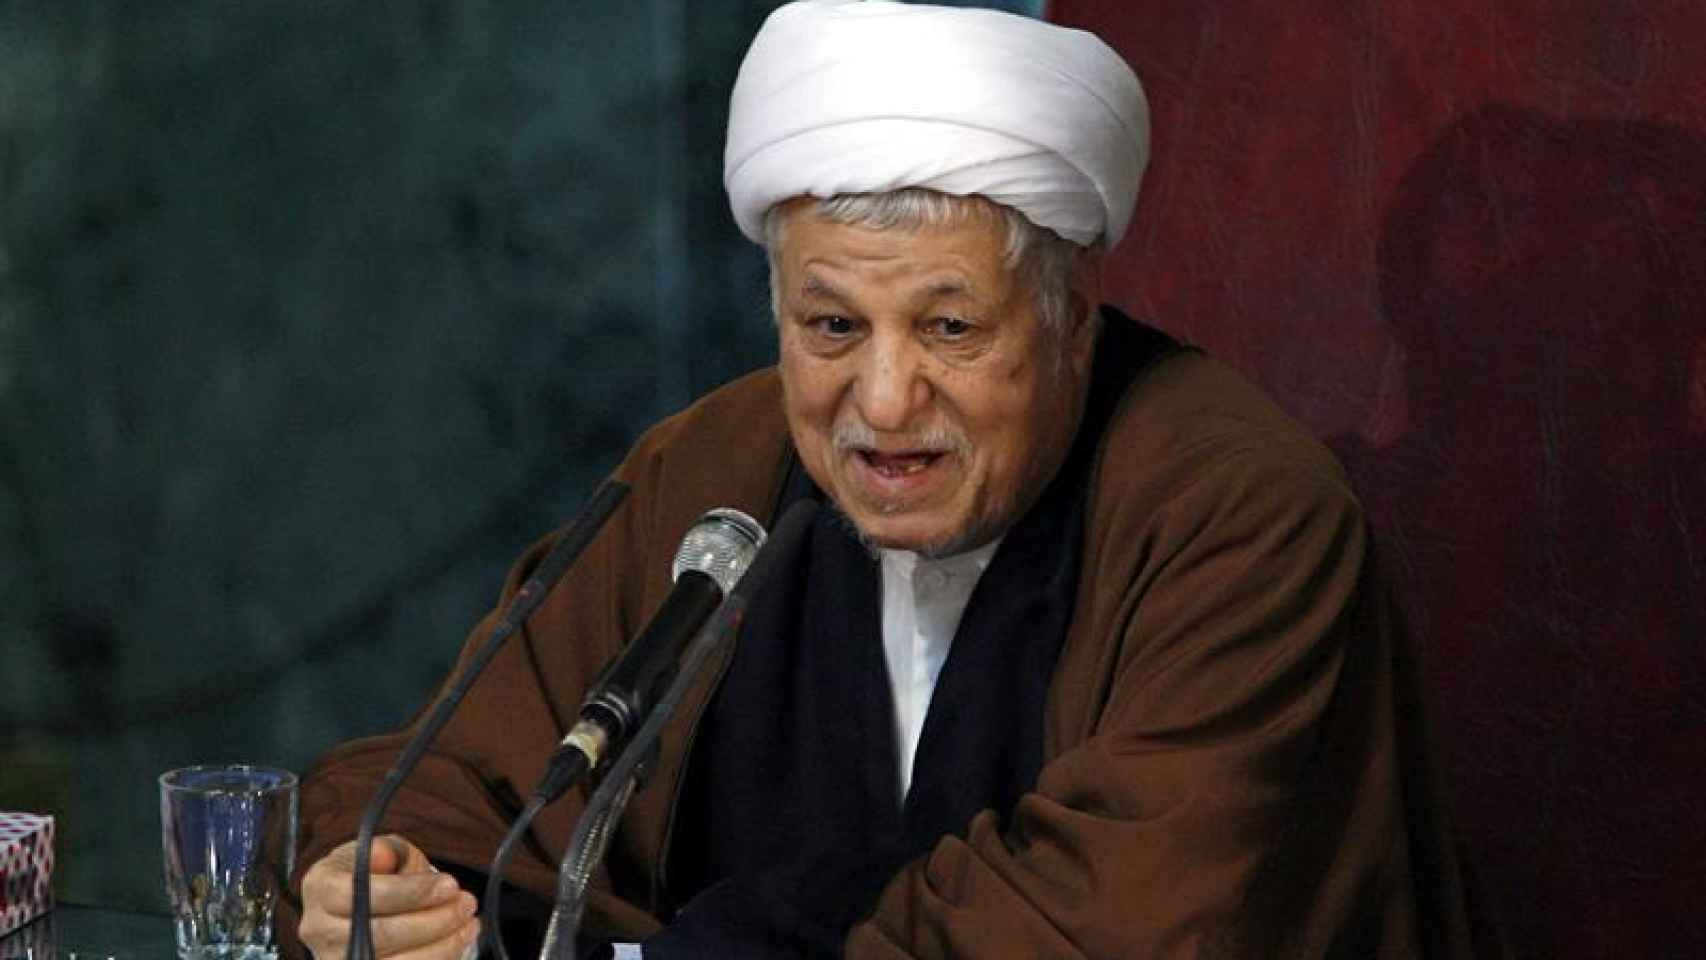 Muere el expresidente iraní Akbar Hashemi Rafsanjani, sucesor de Jamenei